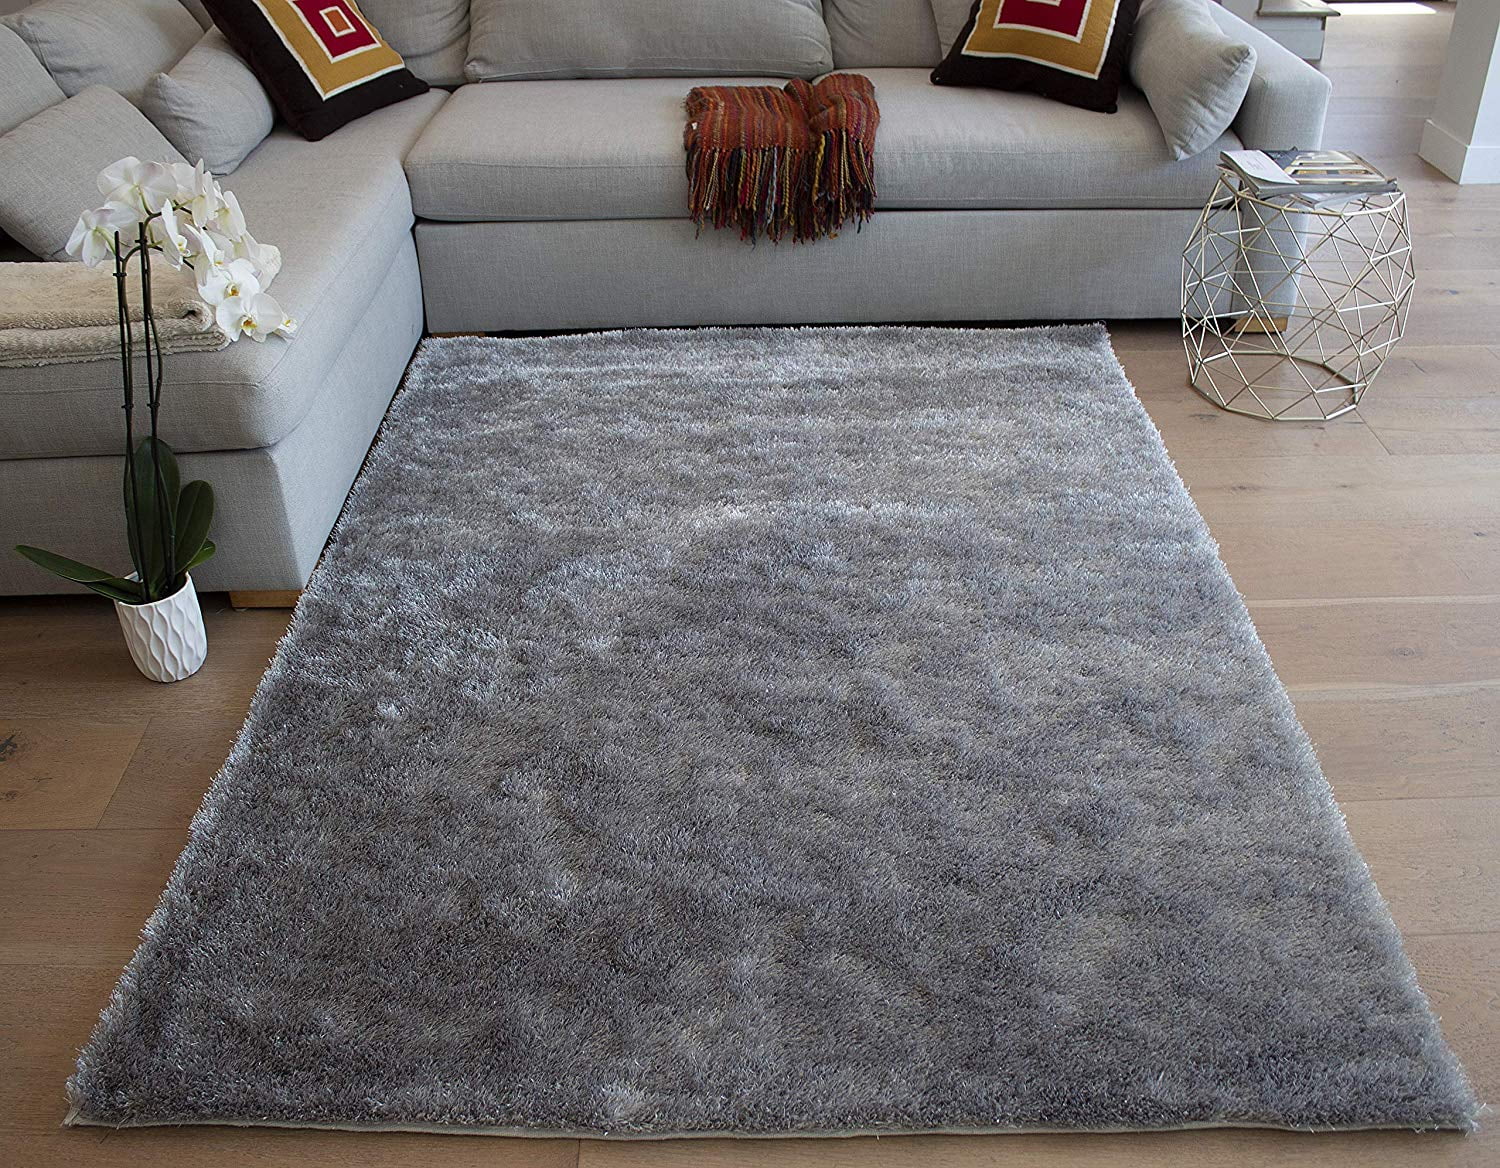 5-Feet-by-7-Feet Silver Light Gray Light Grey New Area Rug Carpet ...